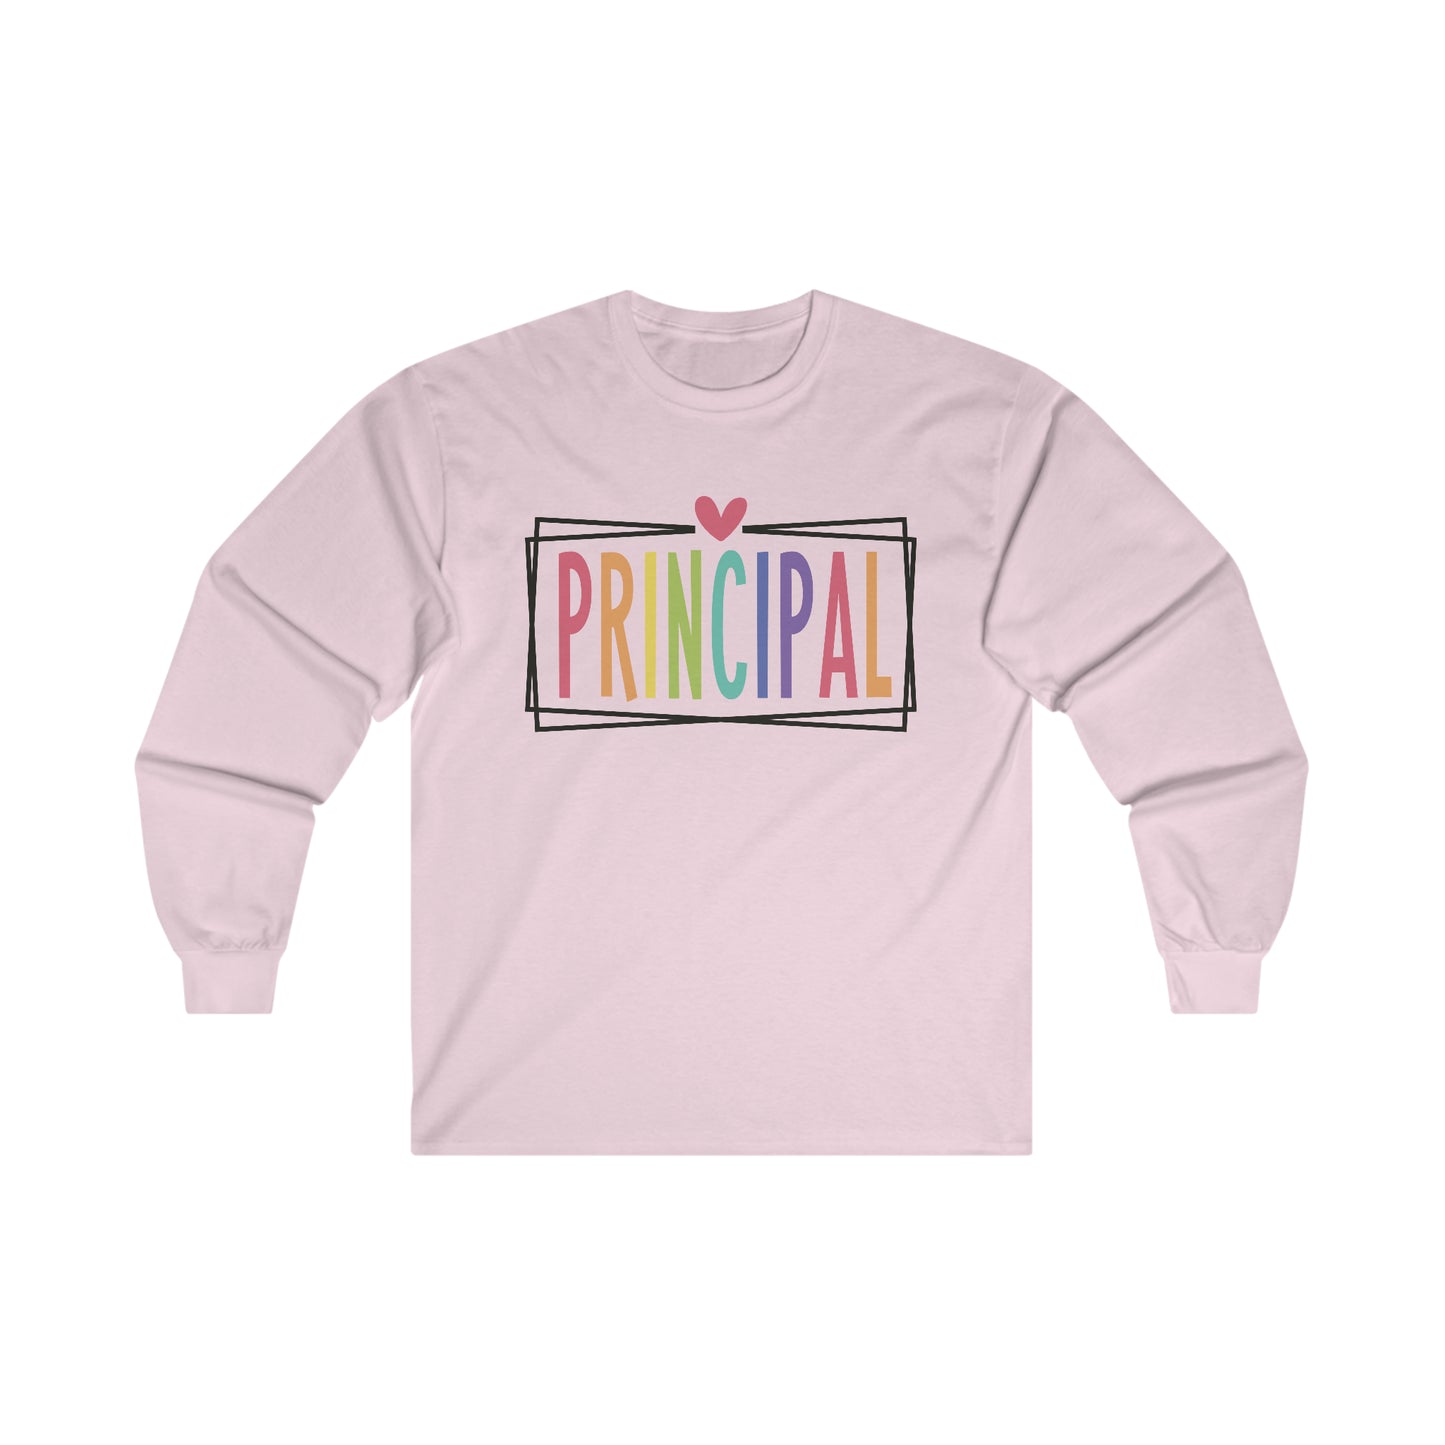 Principal Long Sleeve Shirt